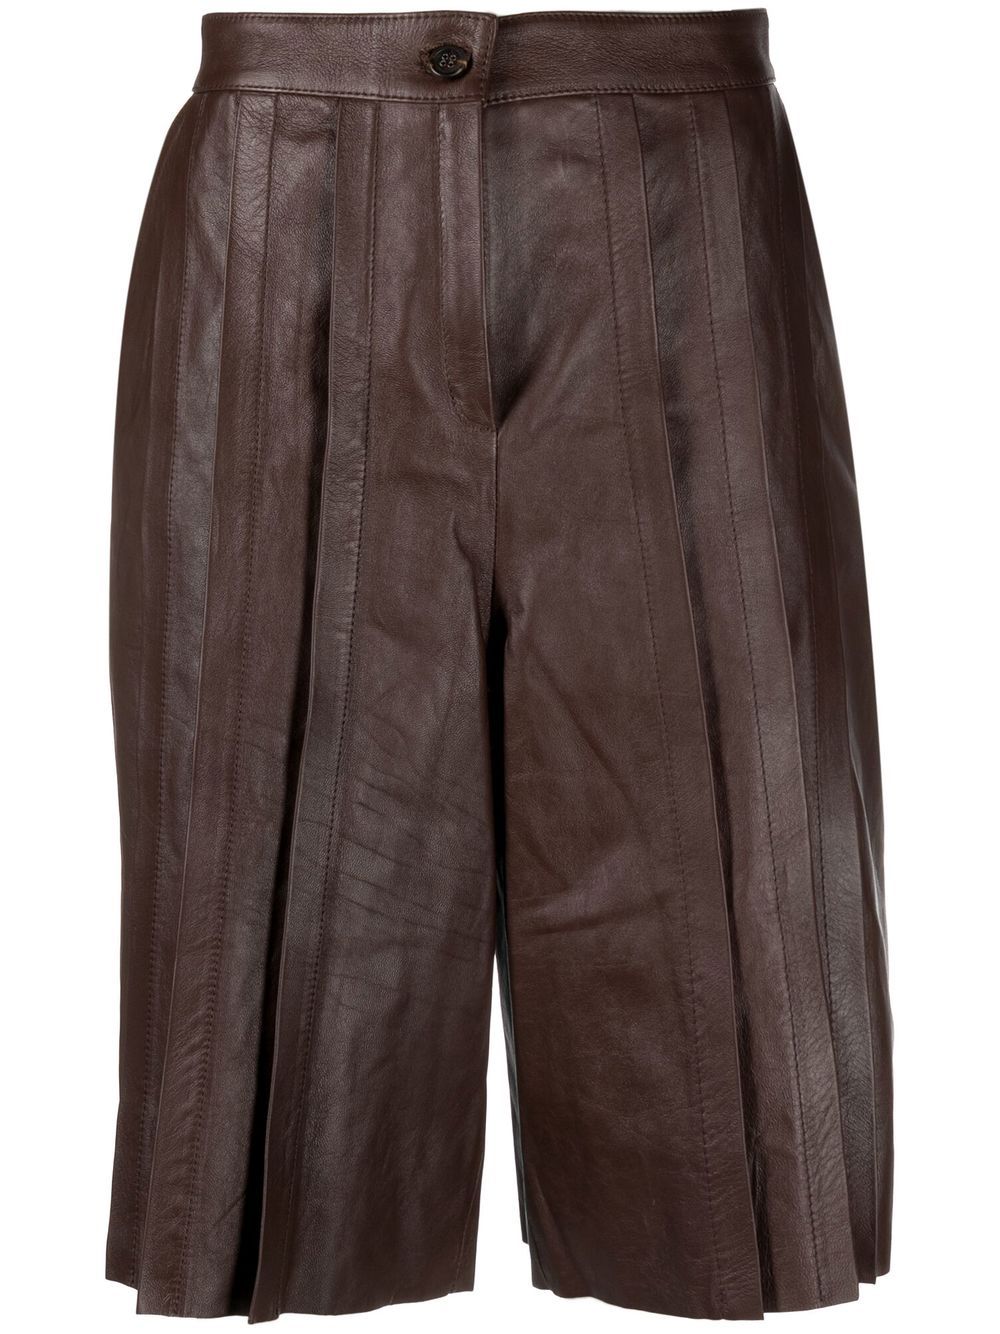 Golden Goose pleated leather shorts - Brown von Golden Goose